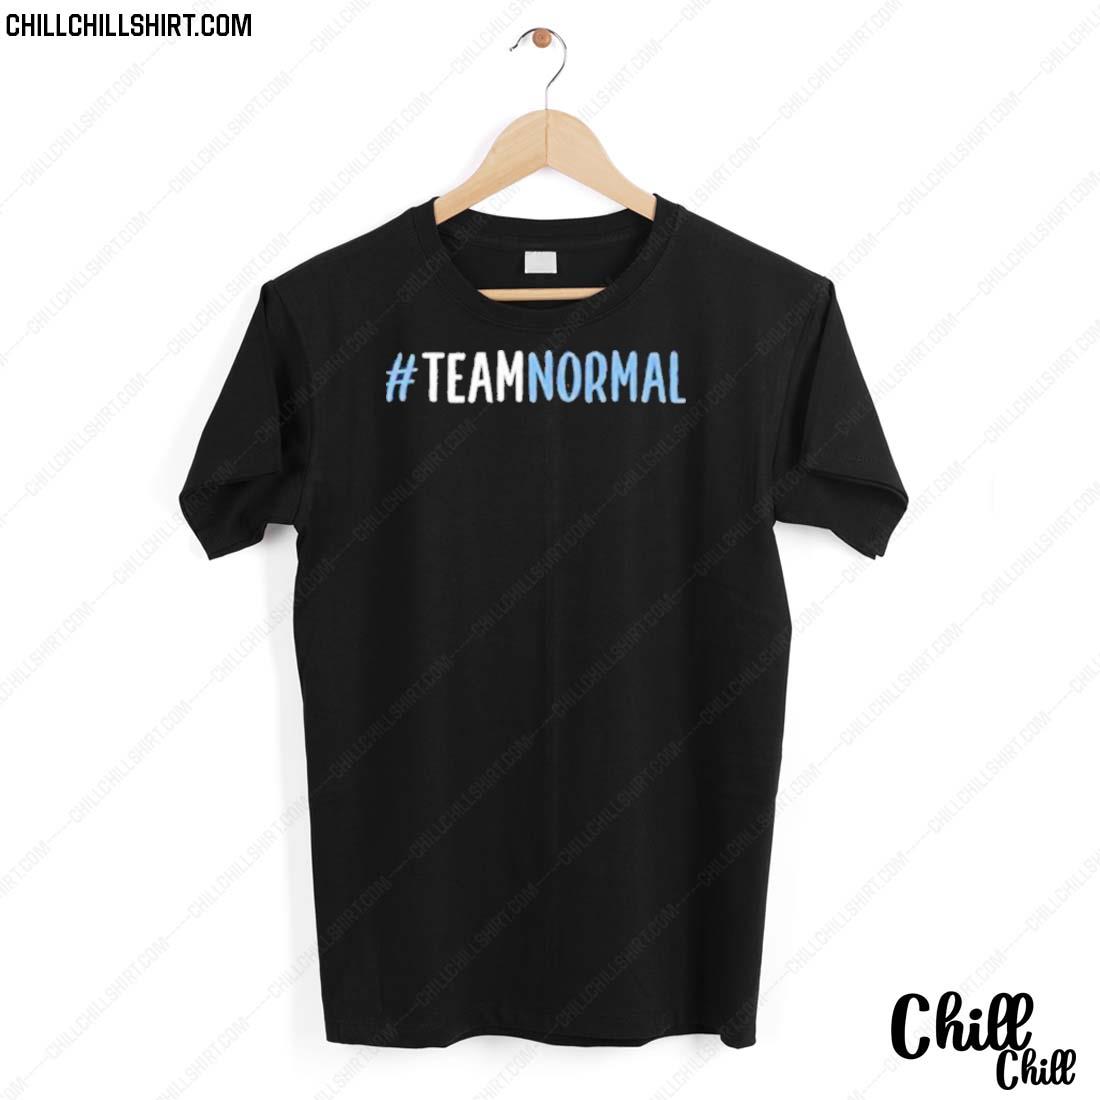 Nice team Normal T-shirt